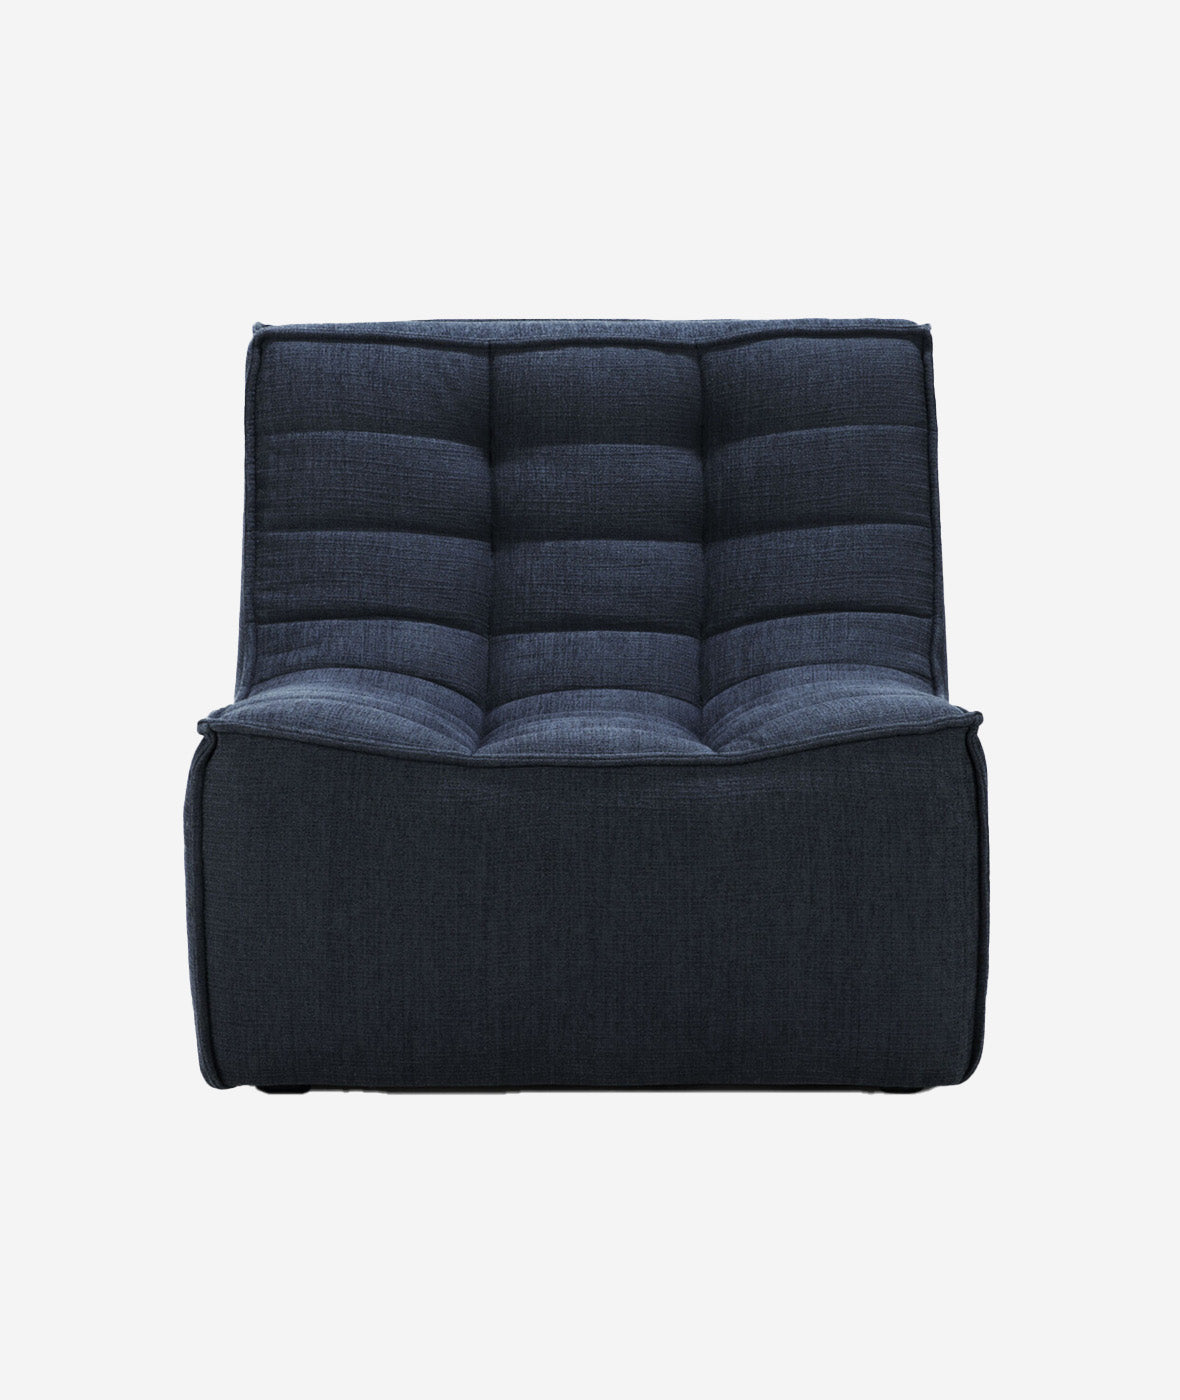 N701 Modular Armless Chair -More Options